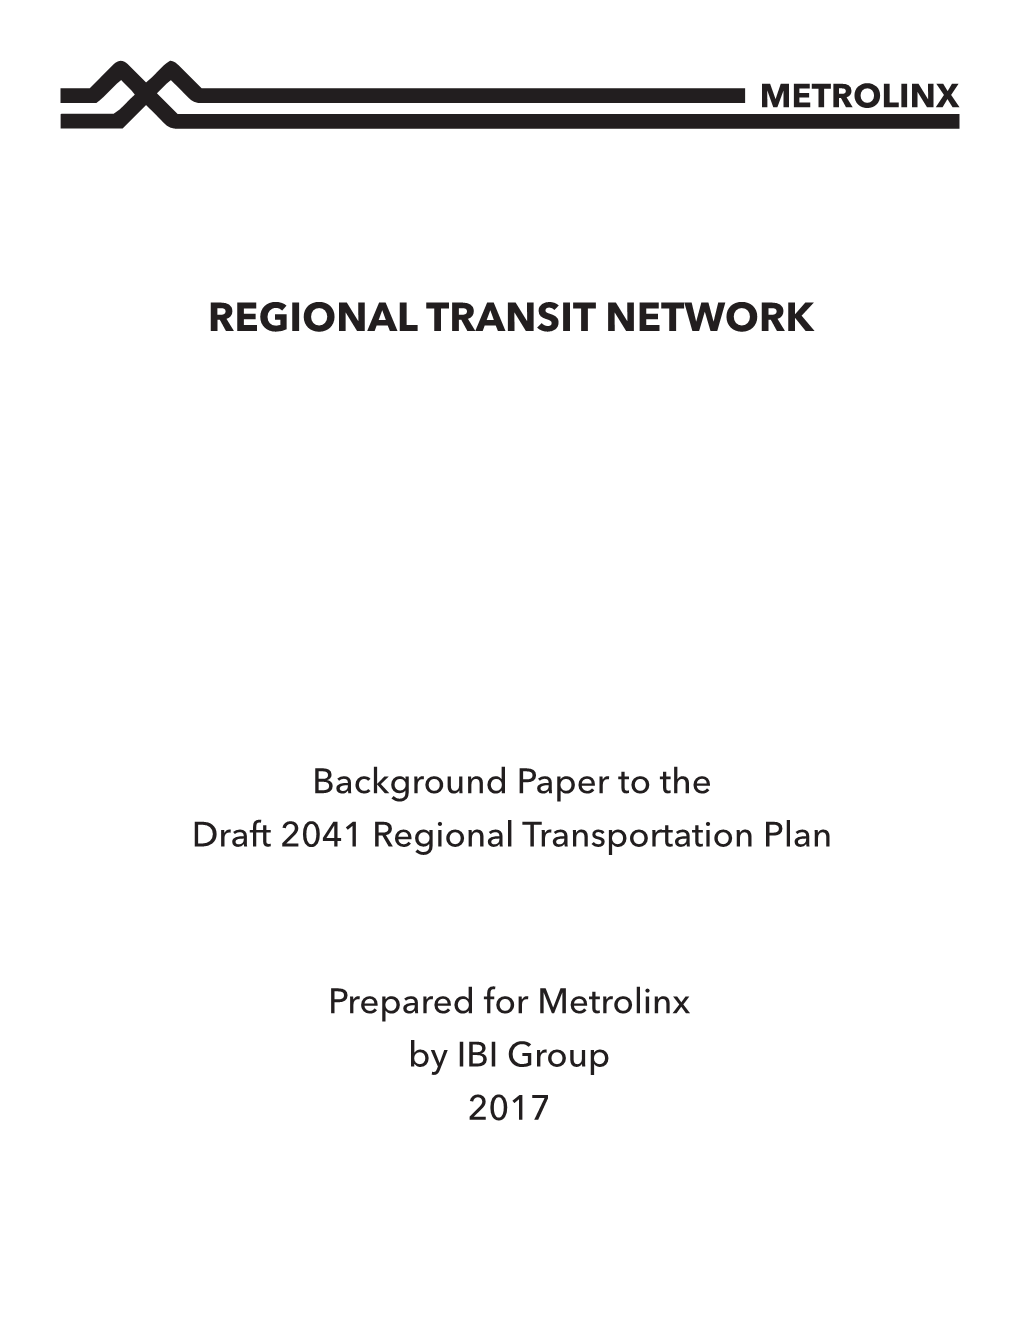 Regional Transit Network Planning Study